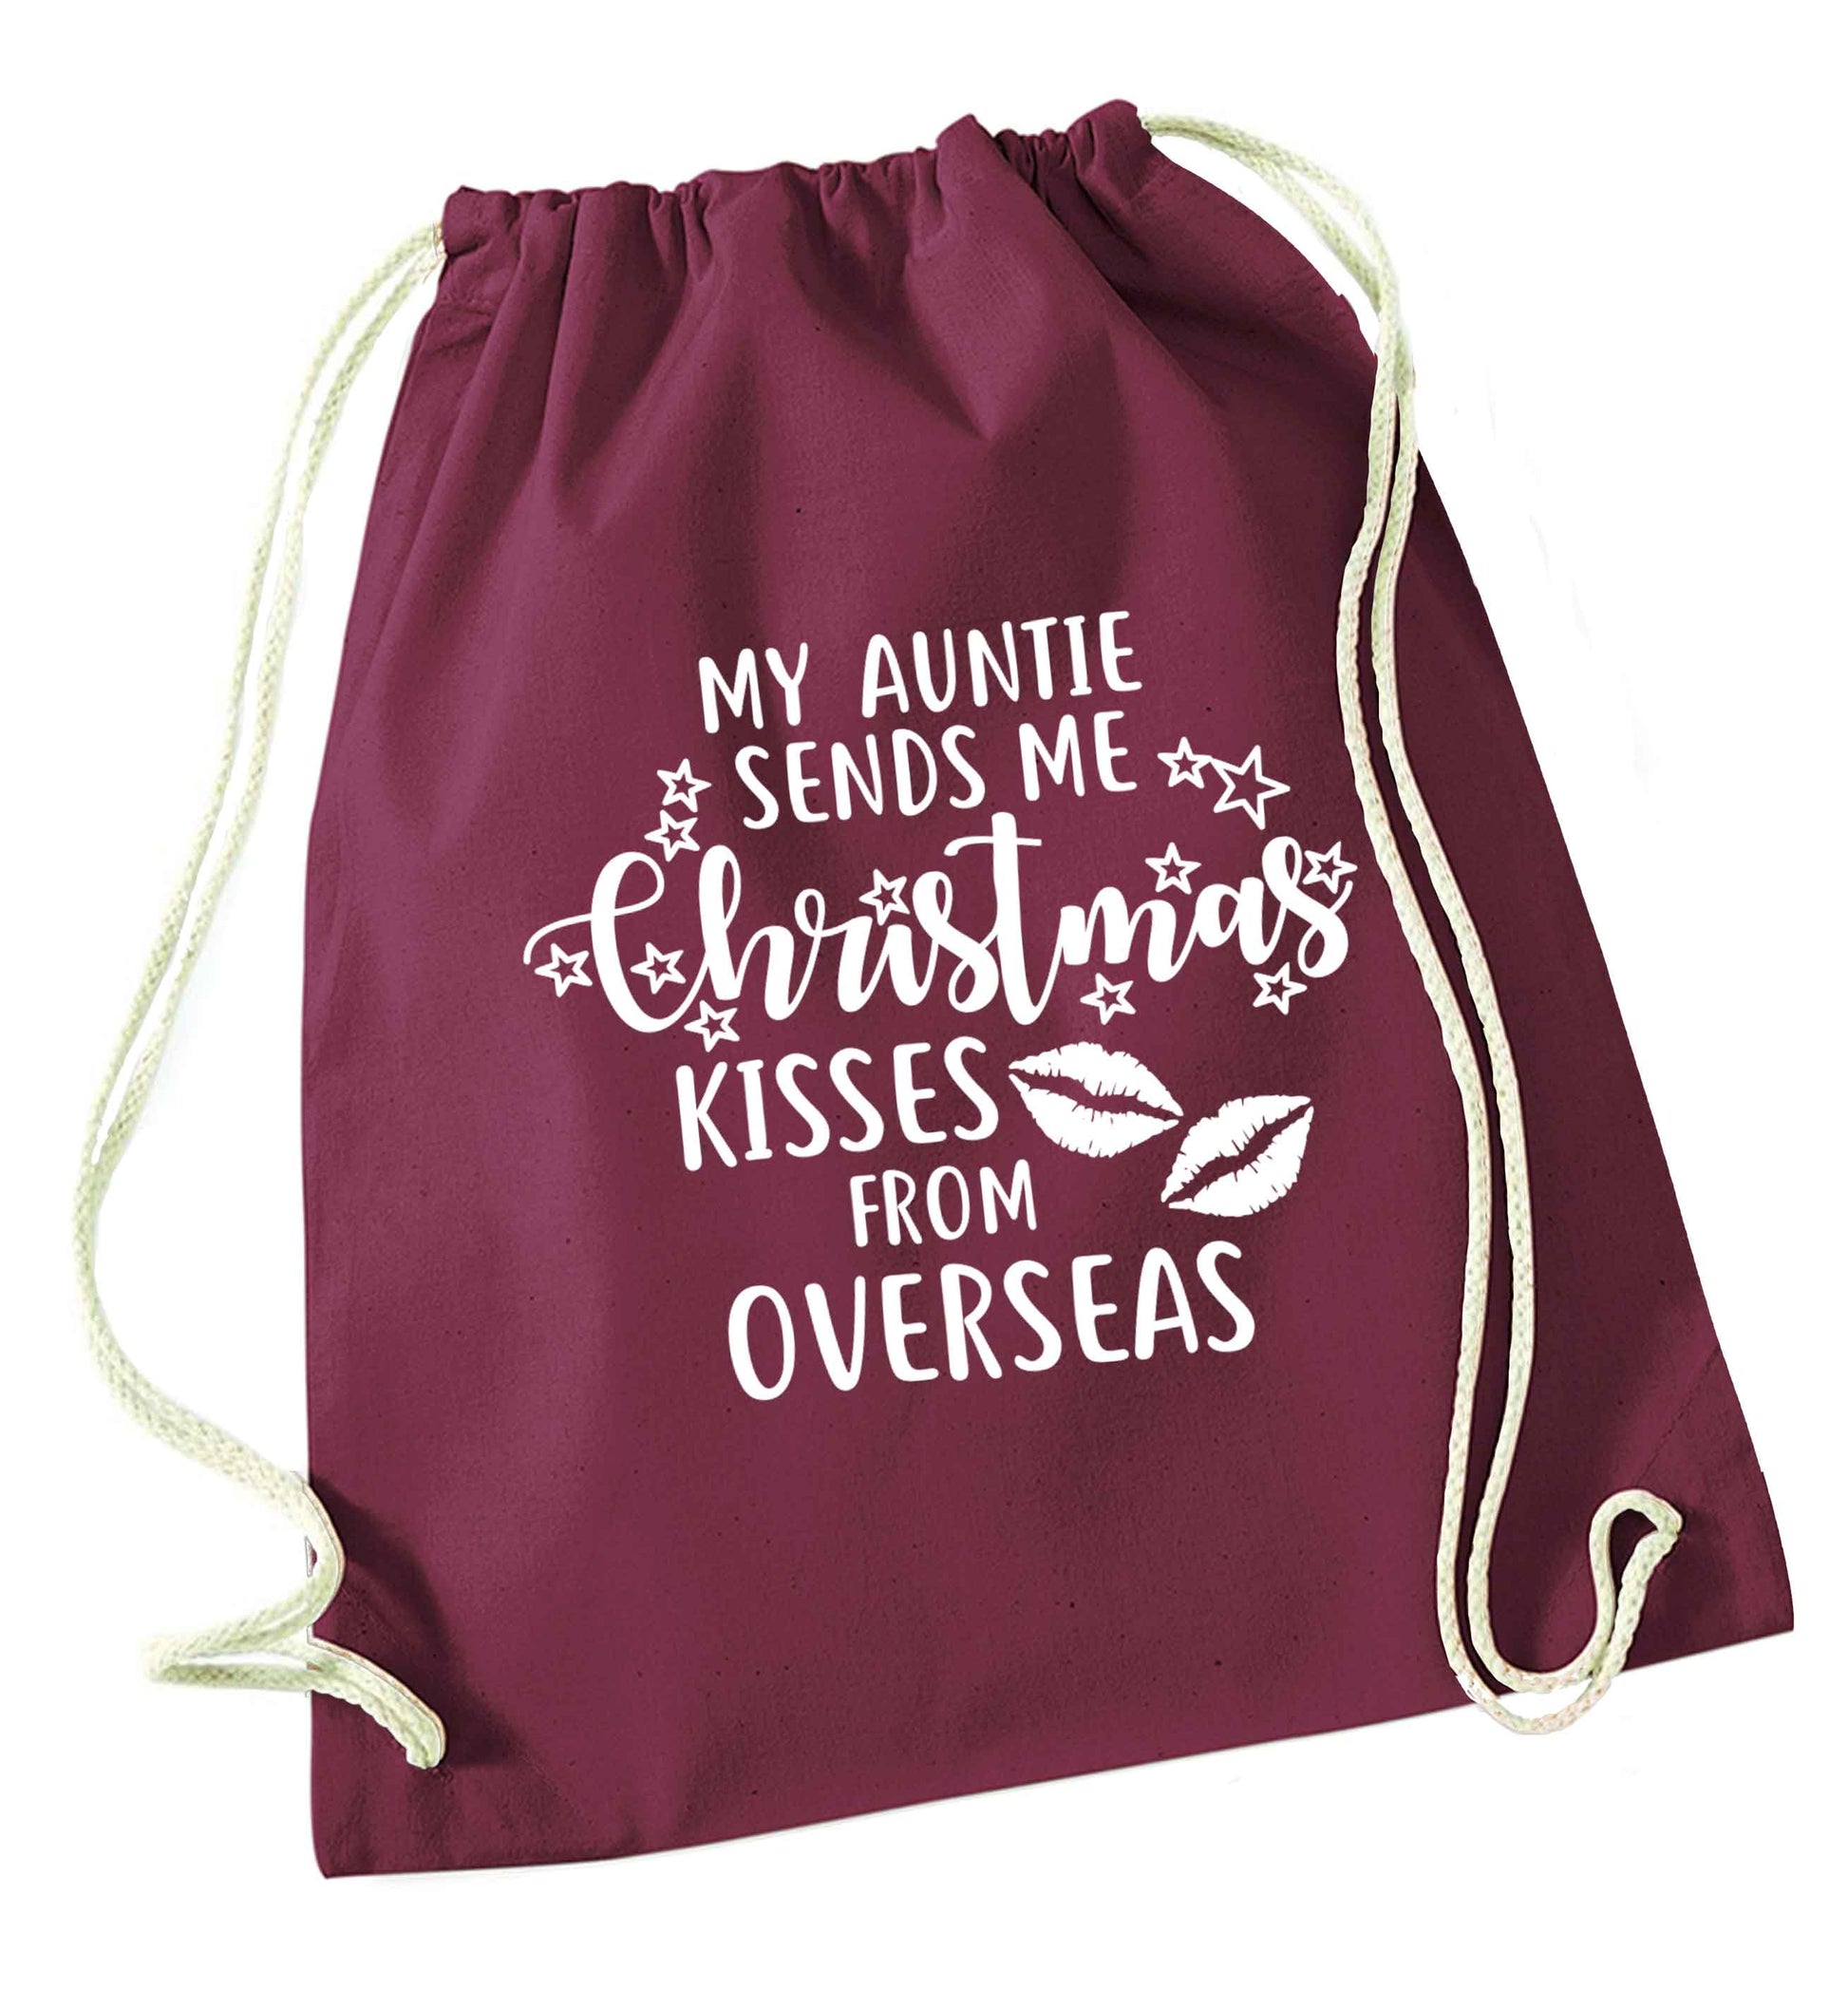 Auntie Christmas Kisses Overseas maroon drawstring bag